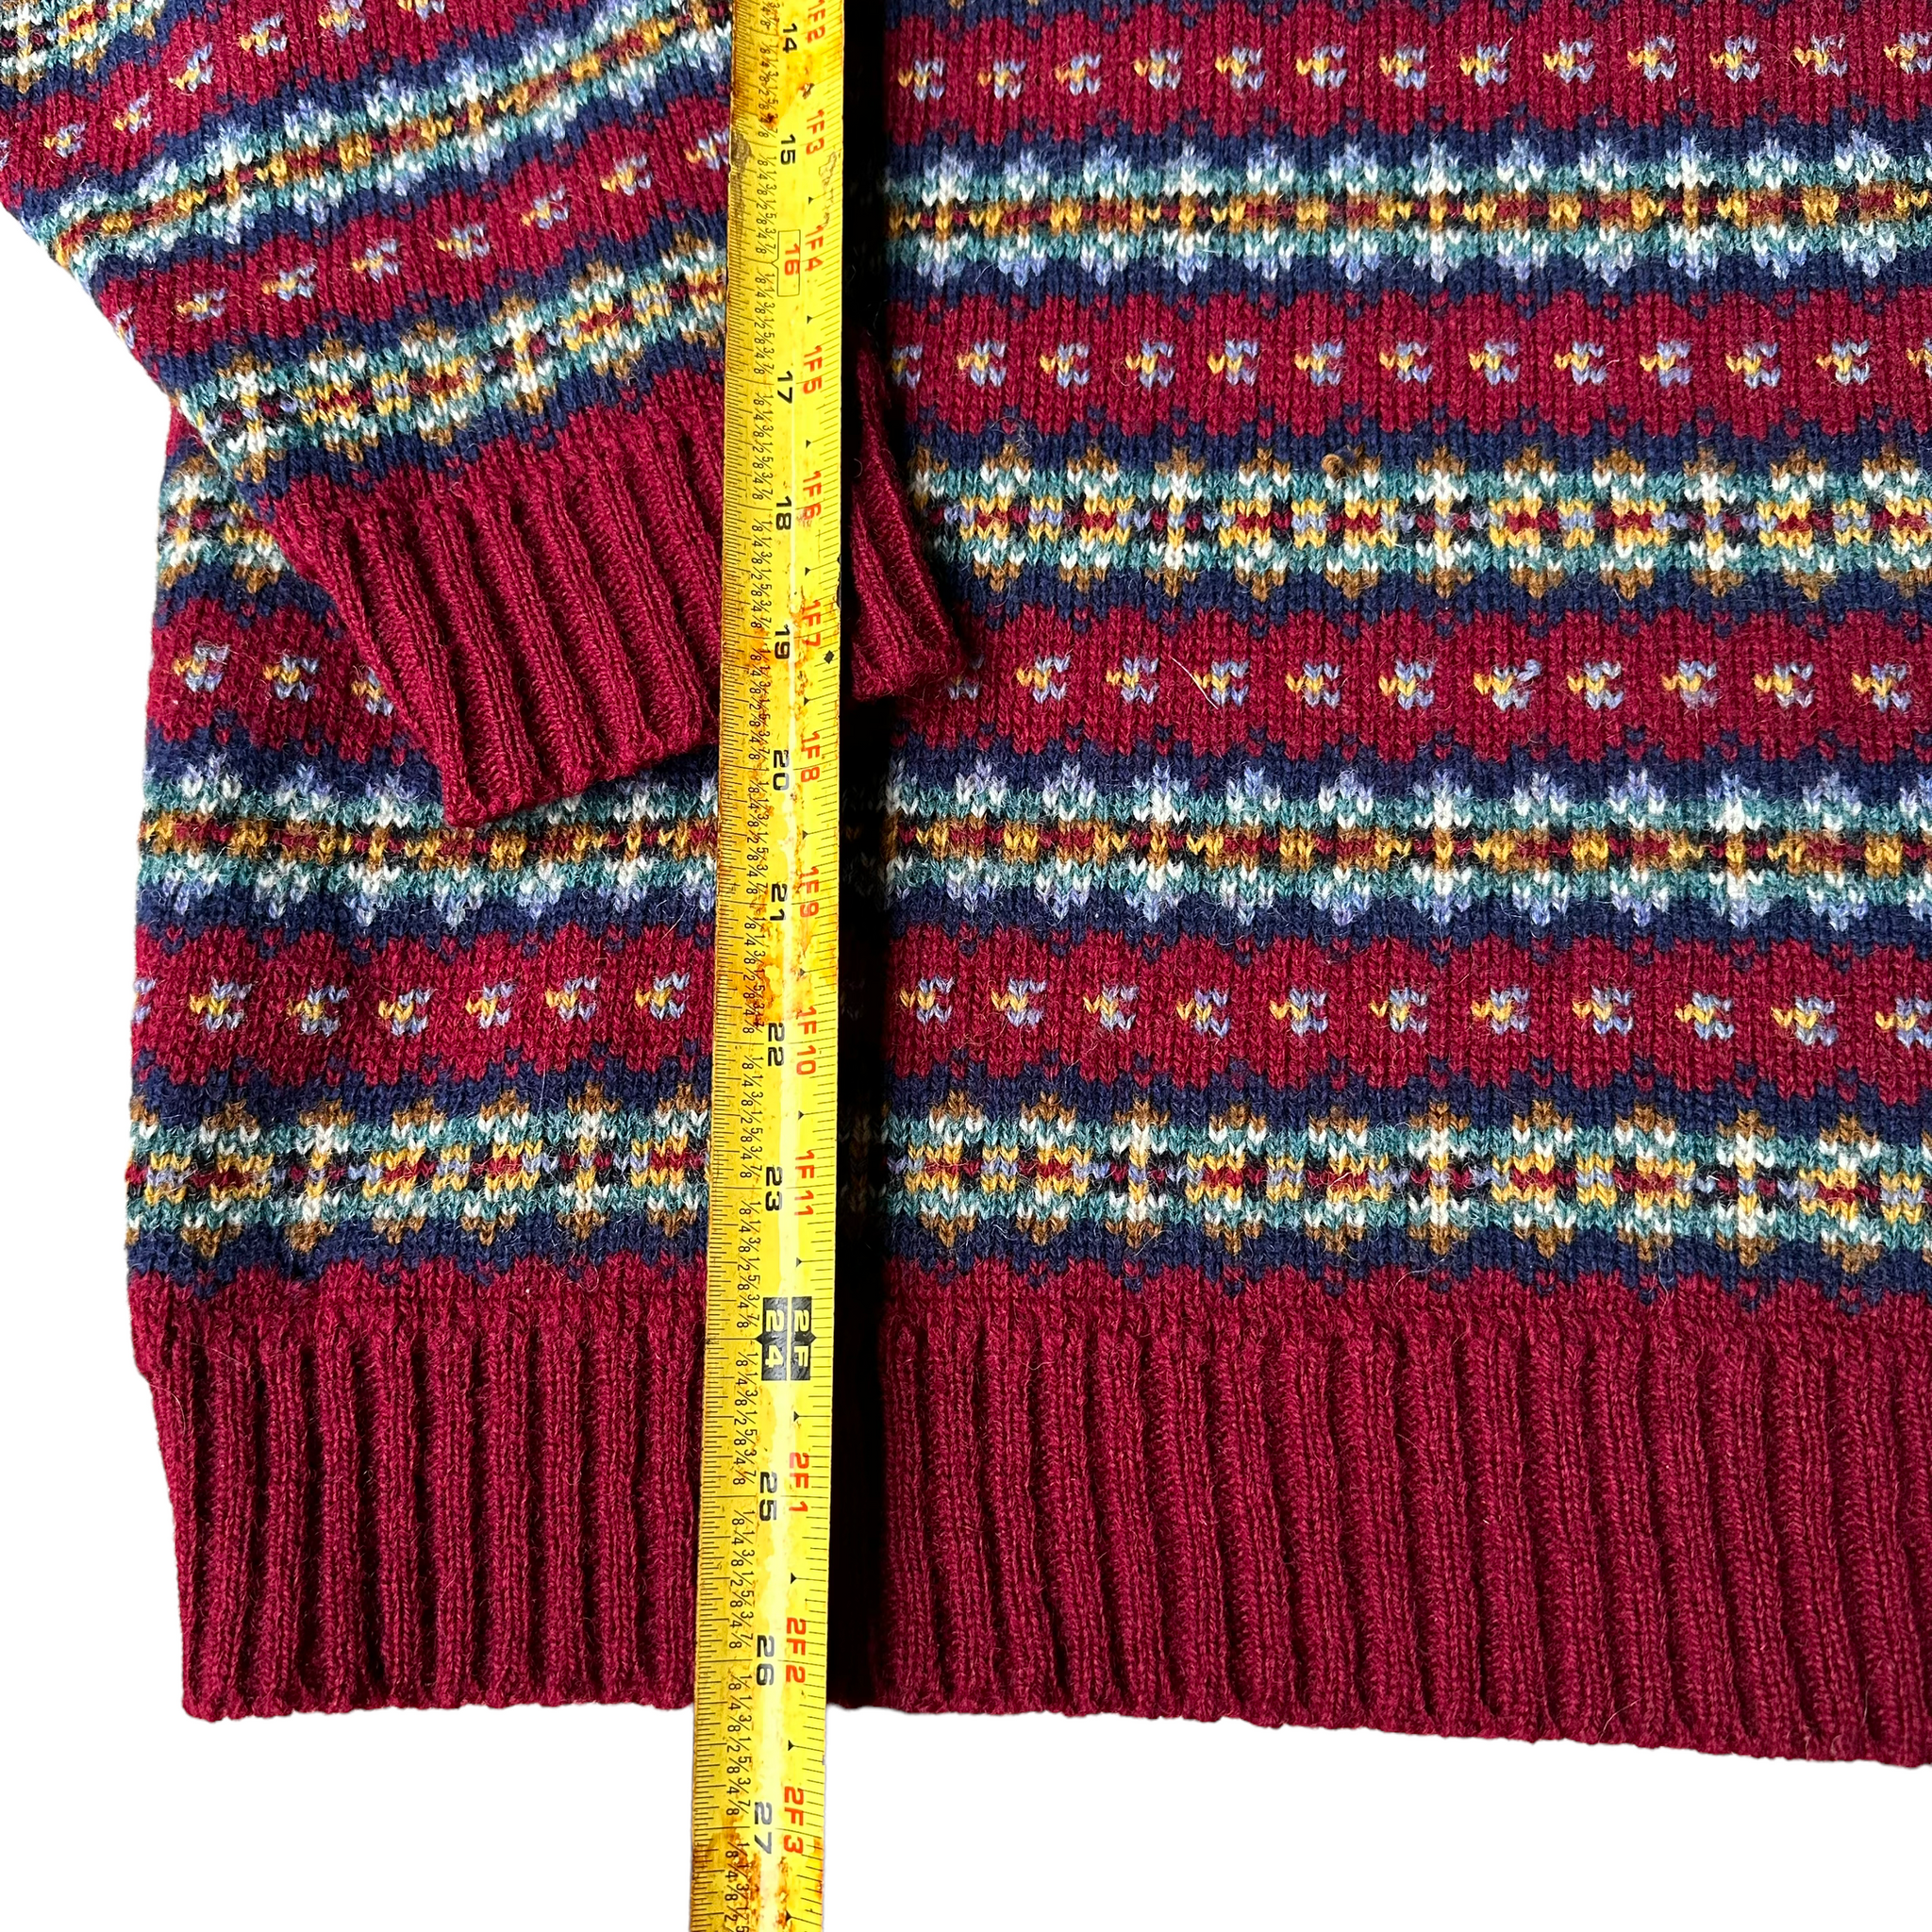 70s Abercrombie & Fitch Shetland wool sweater  M/L